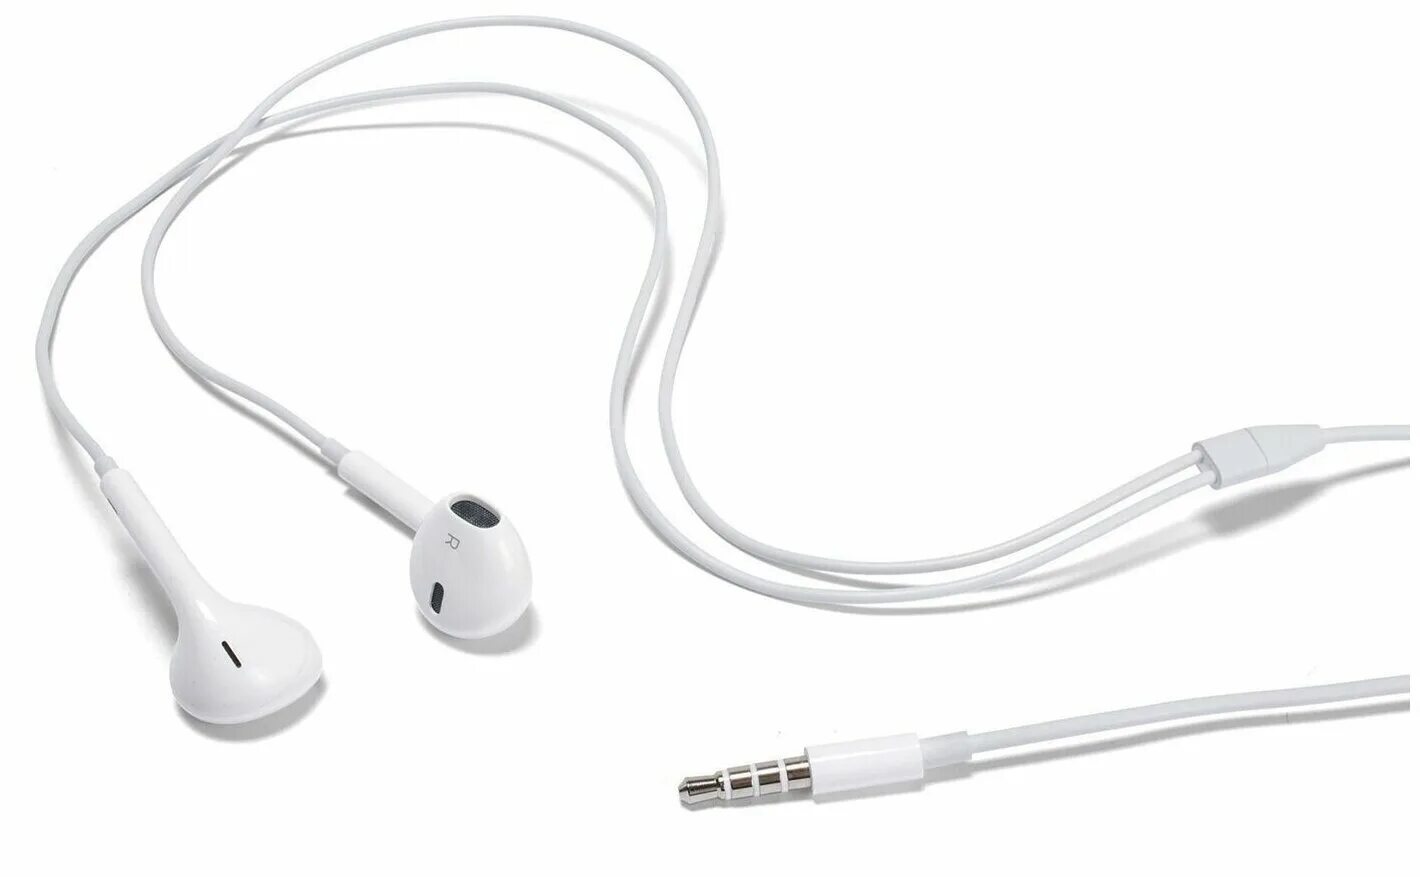 Айфоновские наушники к андроиду. Наушники Apple Earpods (3.5 мм), белый. Наушники Apple Earpods с разъёмом 3.5. Md827fe/a наушники для Apple Earpods. Наушники с микрофоном Apple Earpods Headphone Plug (mnhf2zm/a).